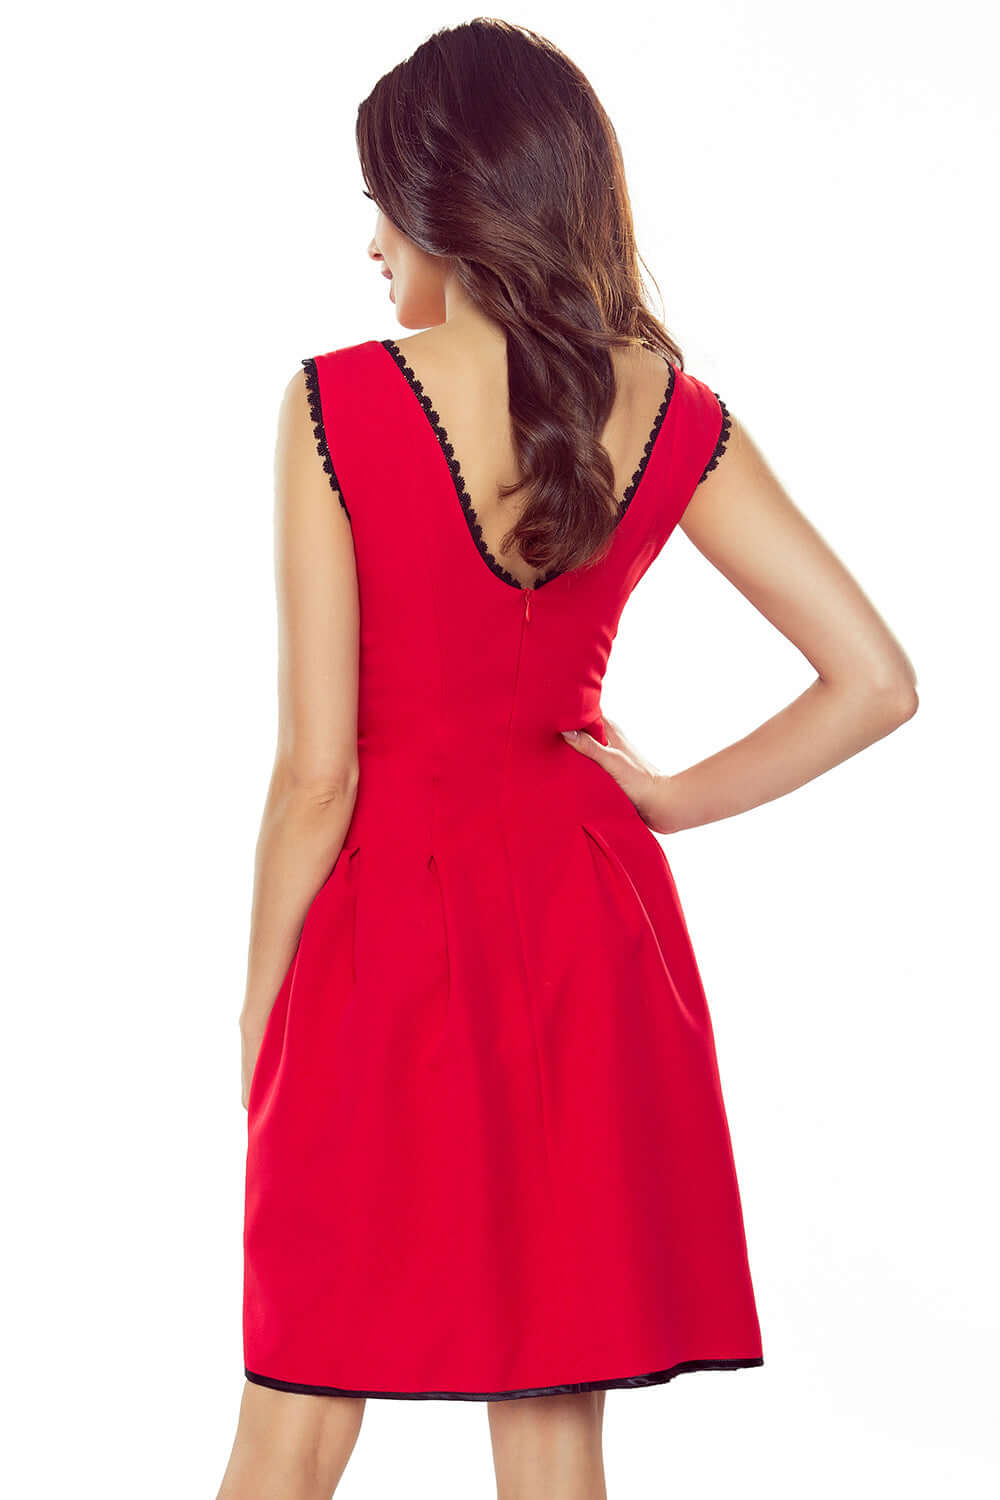 Bergamo 452-4 Flared dress with lace in the neckline - red | Shangri-La Fashion